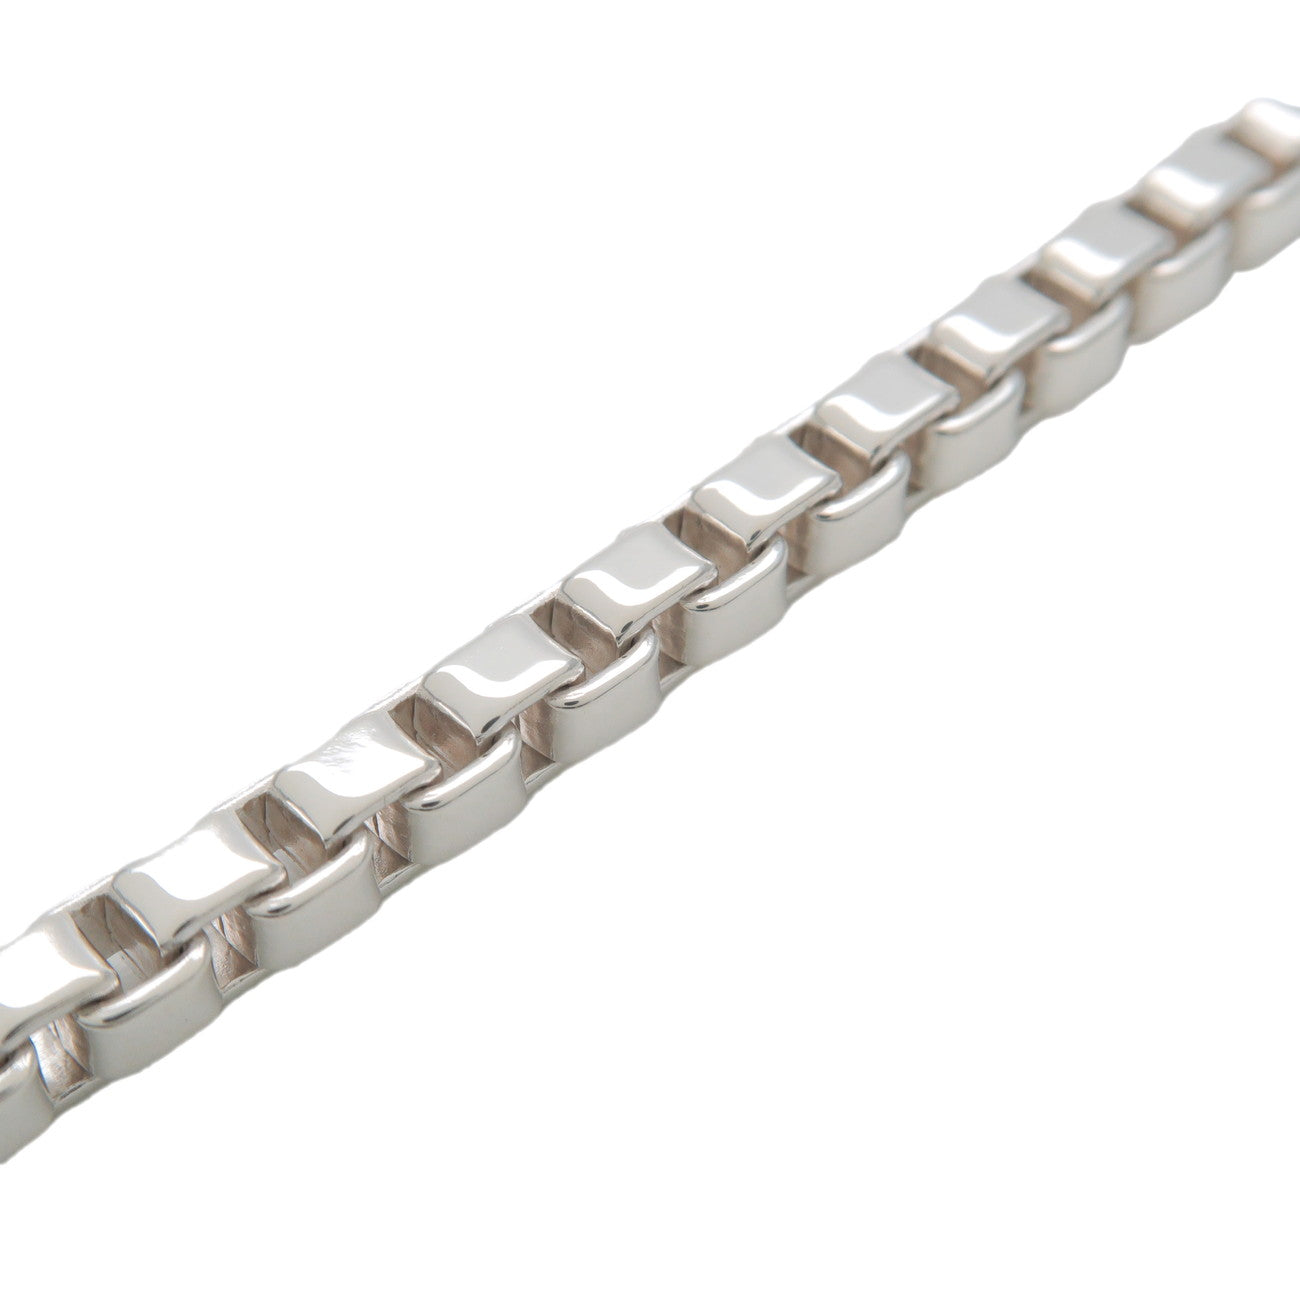 Tiffany&Co. Tiffany Venetian Link Bracelet SV925 Silver